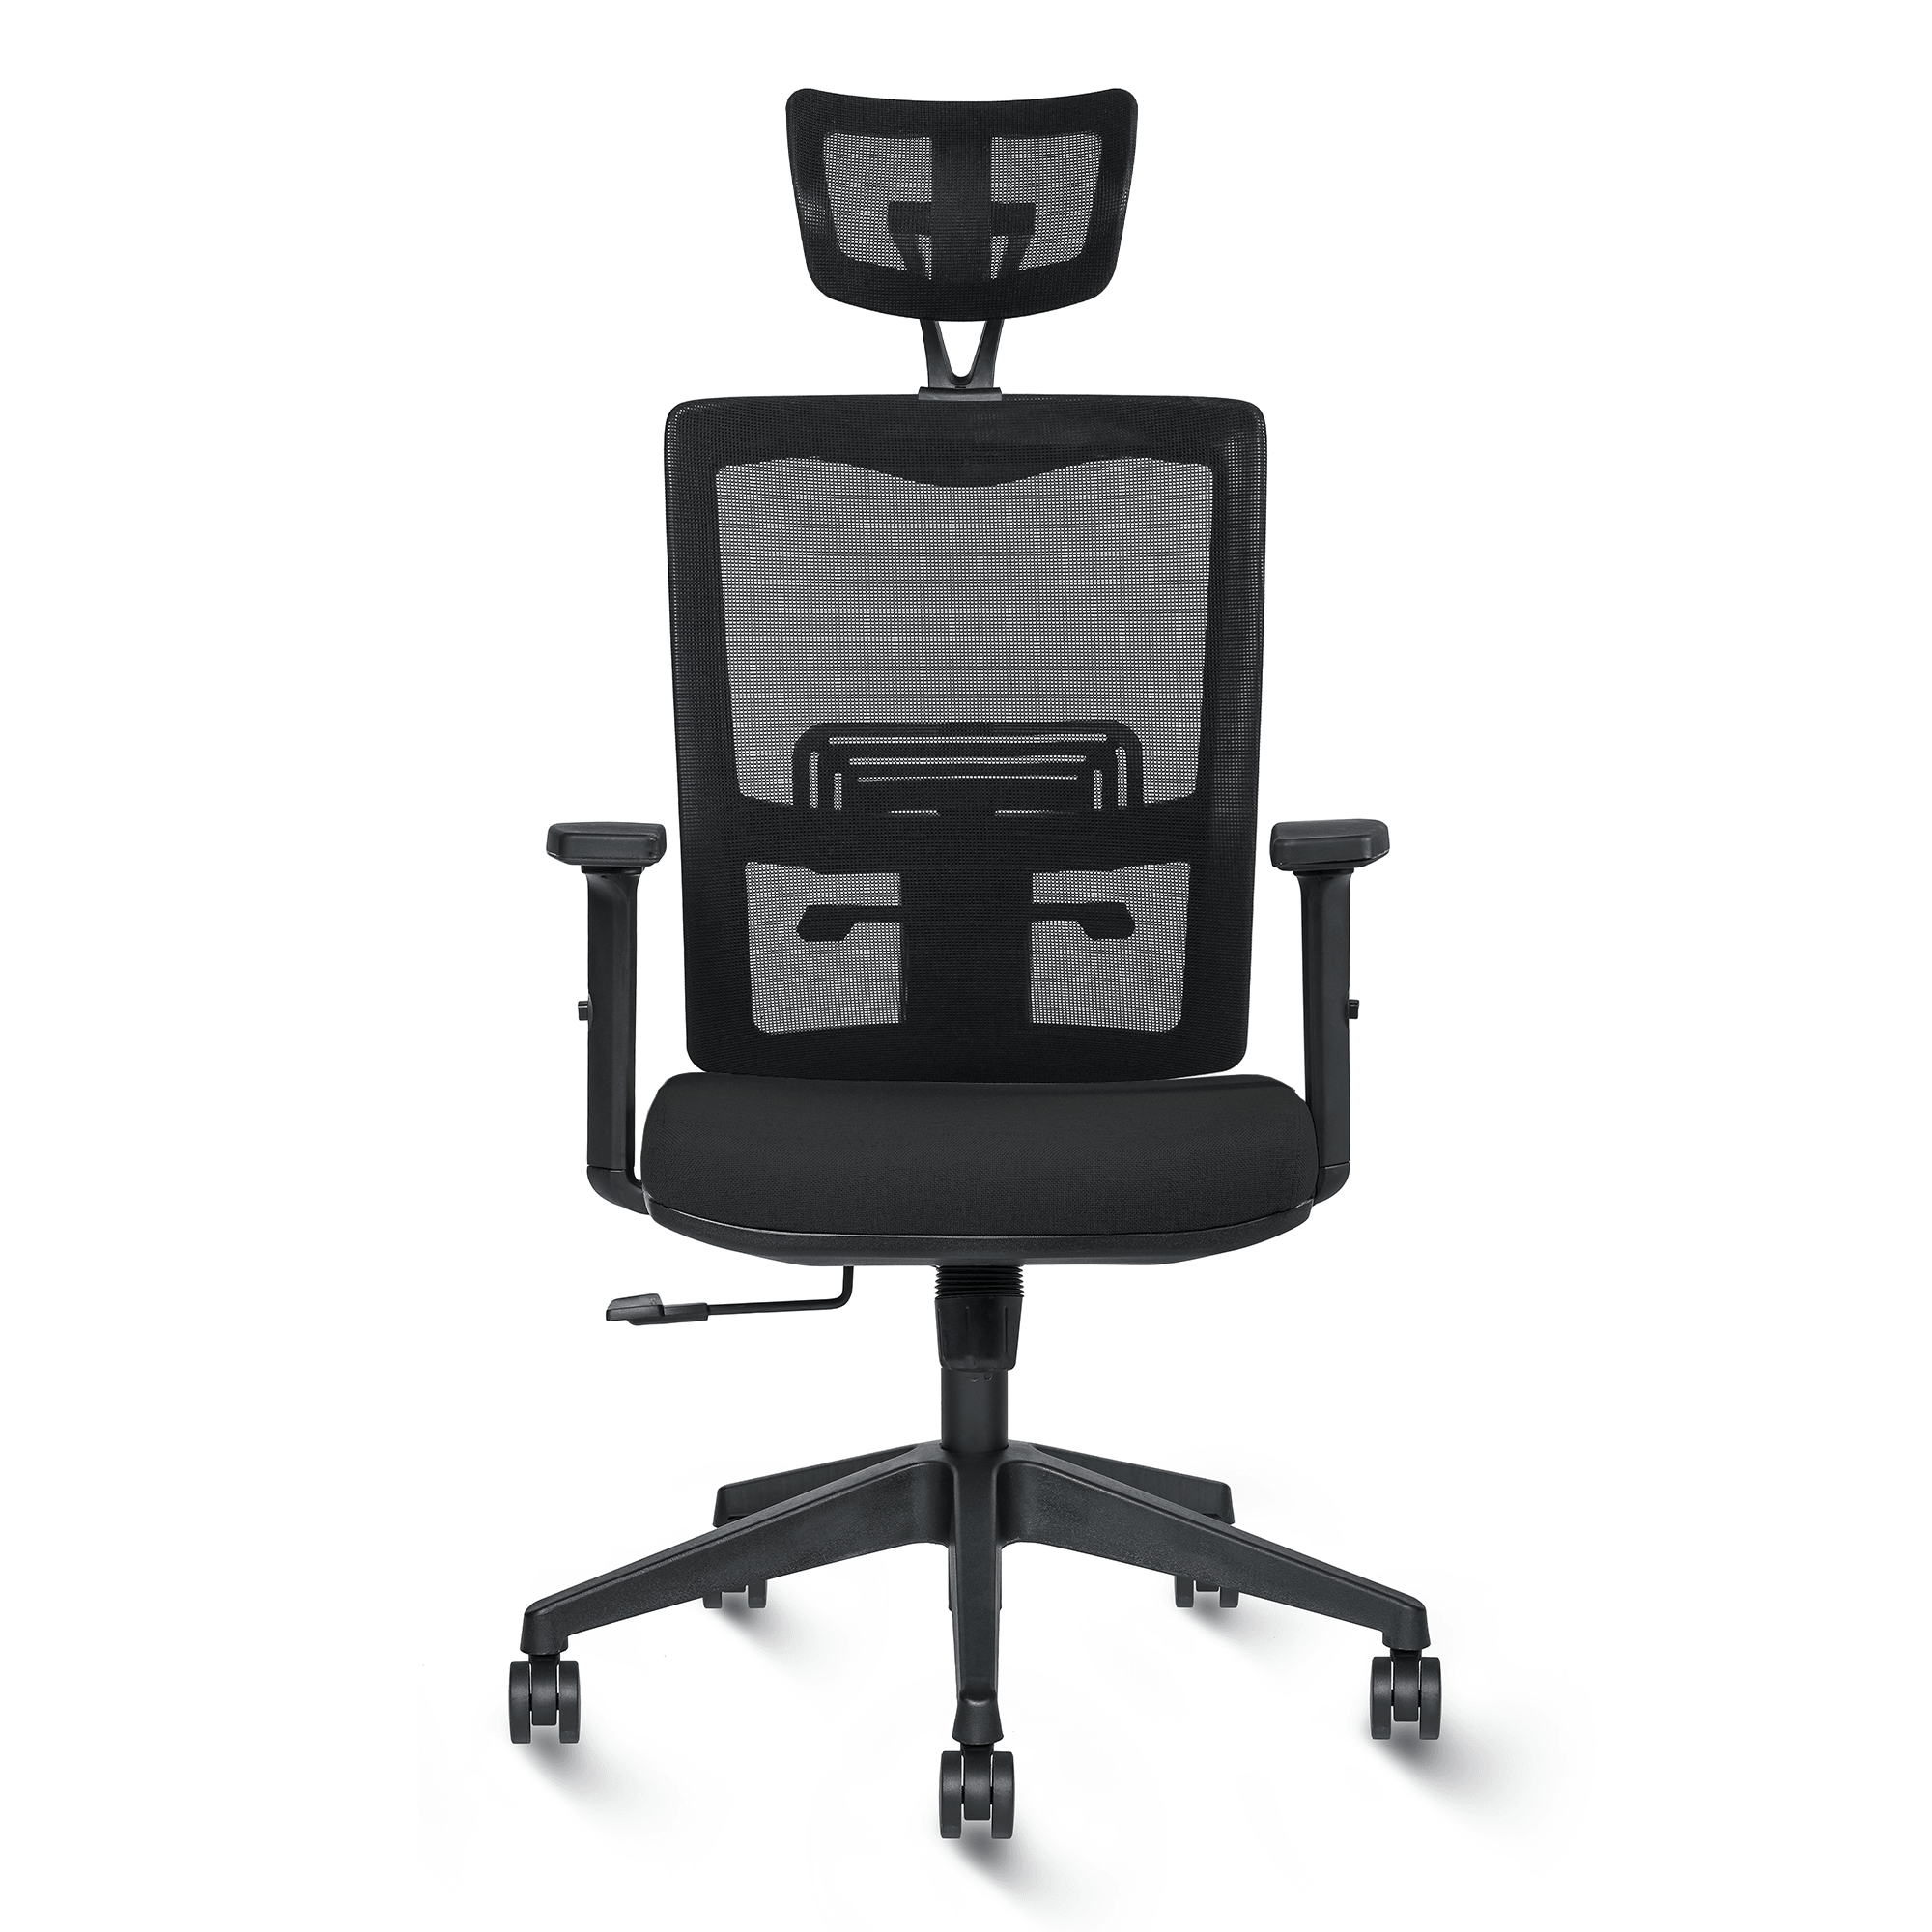 ZAP High Back LX (Black Chair)